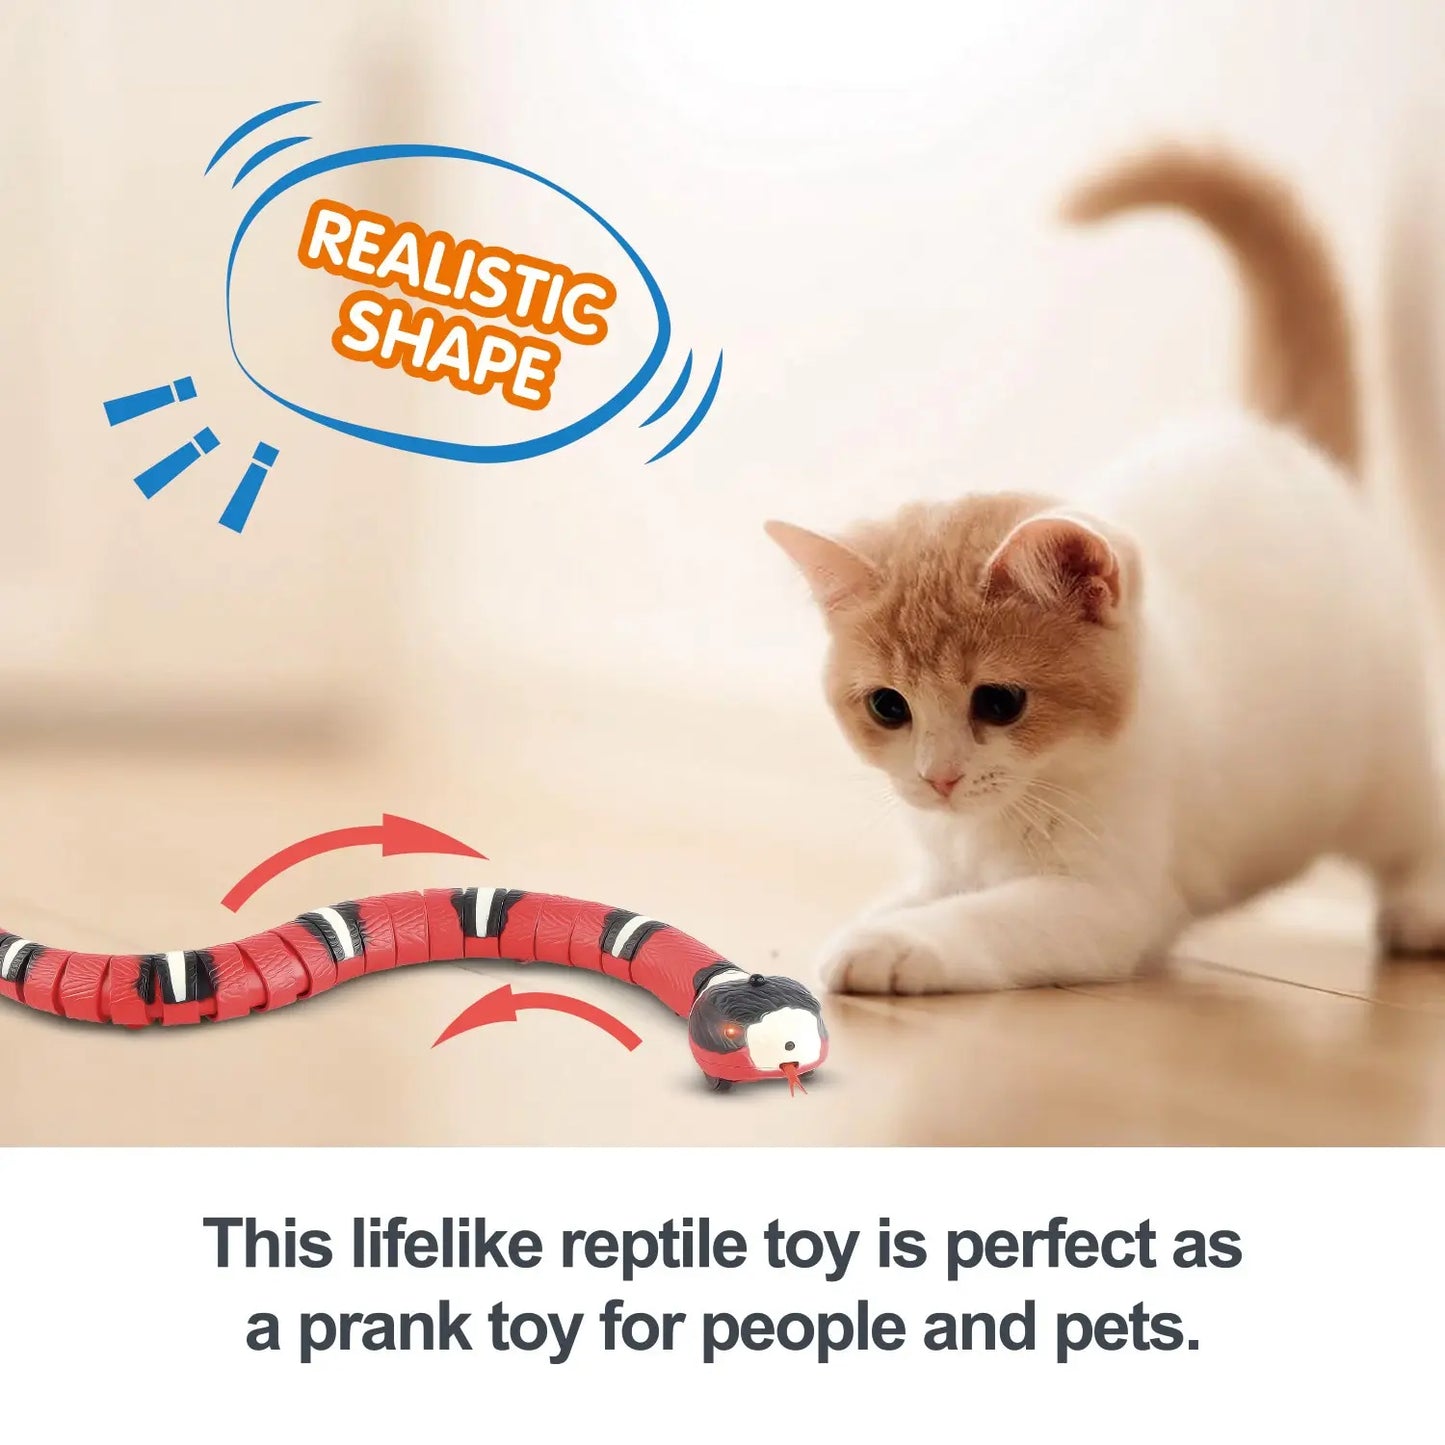 Smart Sensing Cat Toys Interactive Automatic Eletronic